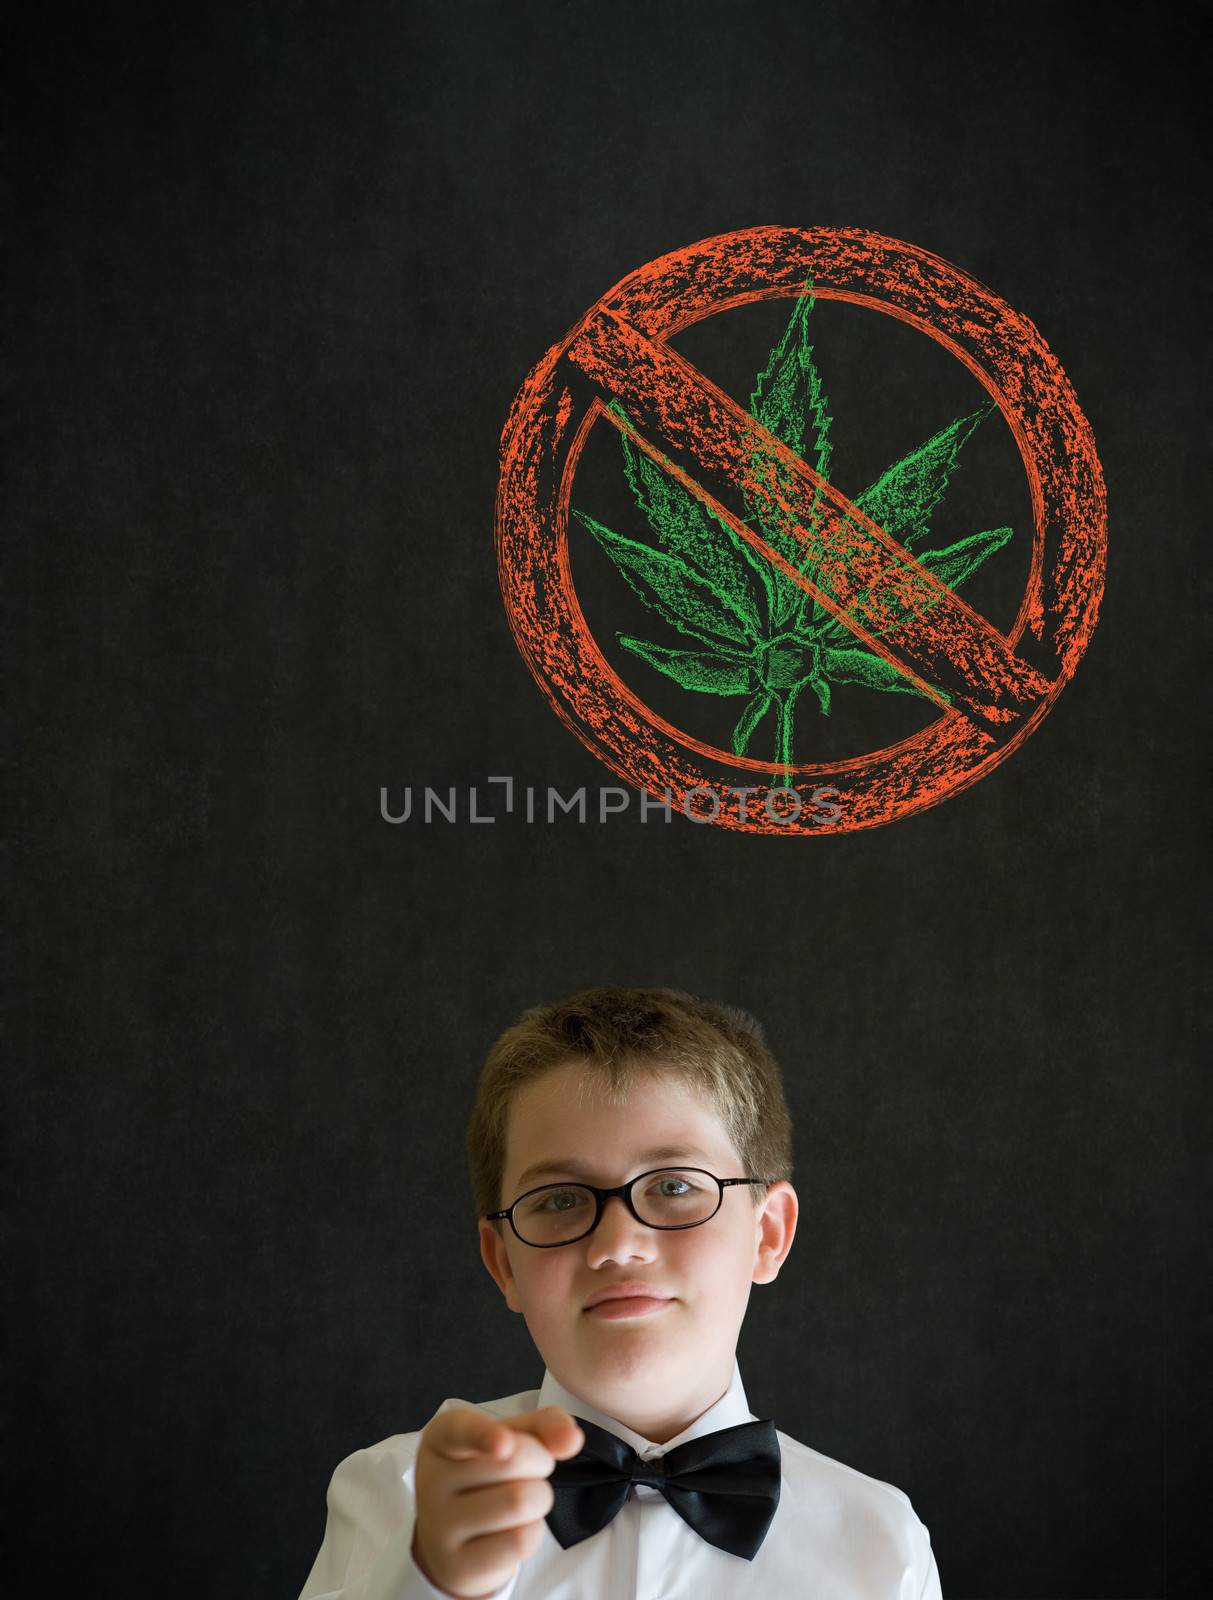 Education needs you thinking boy dressed up as business man with no weed marijuana on blackboard background